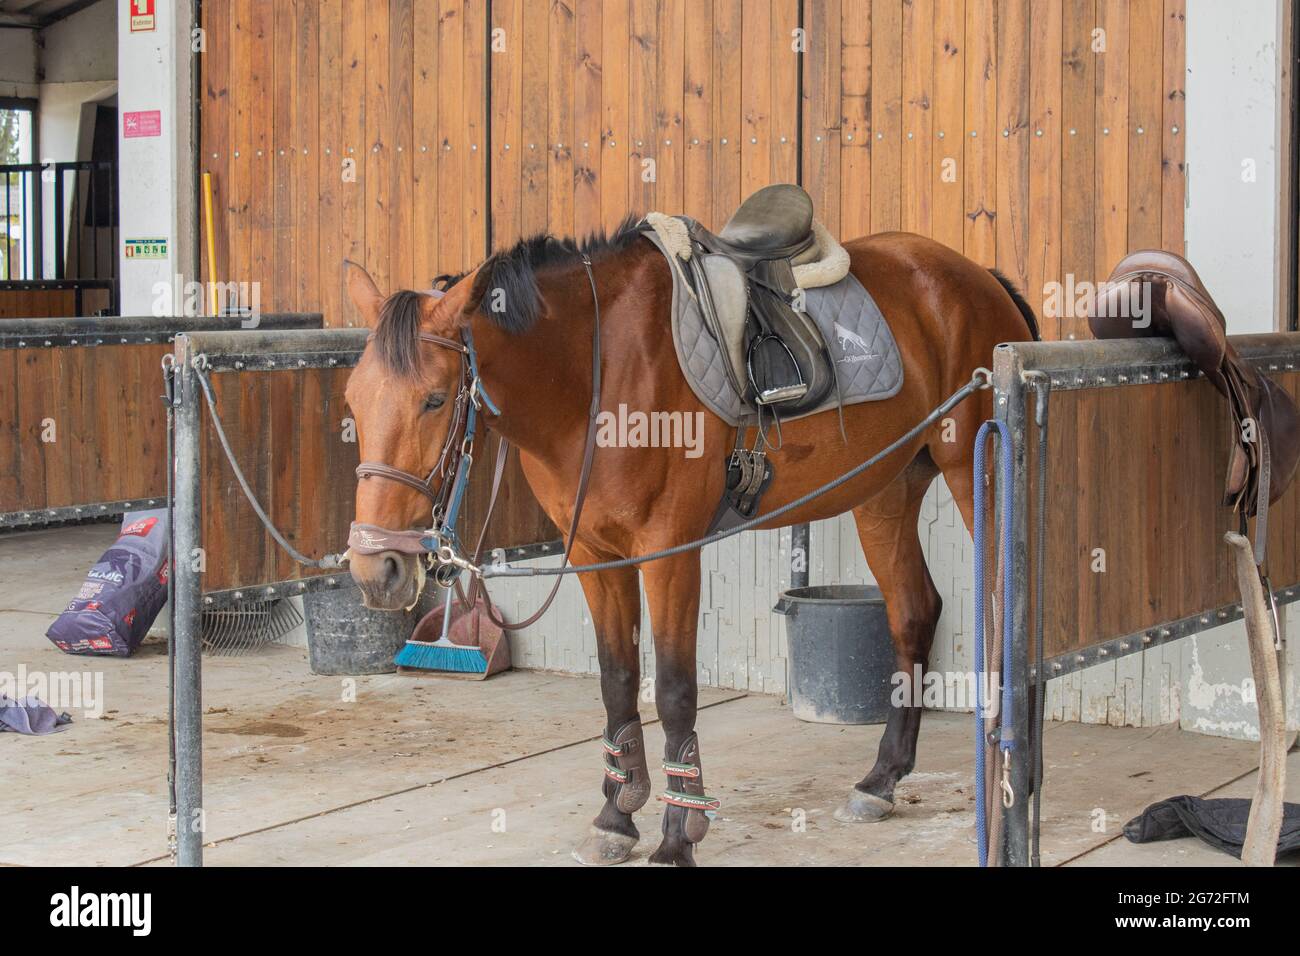 Horse prepared for a ride Stock Photo